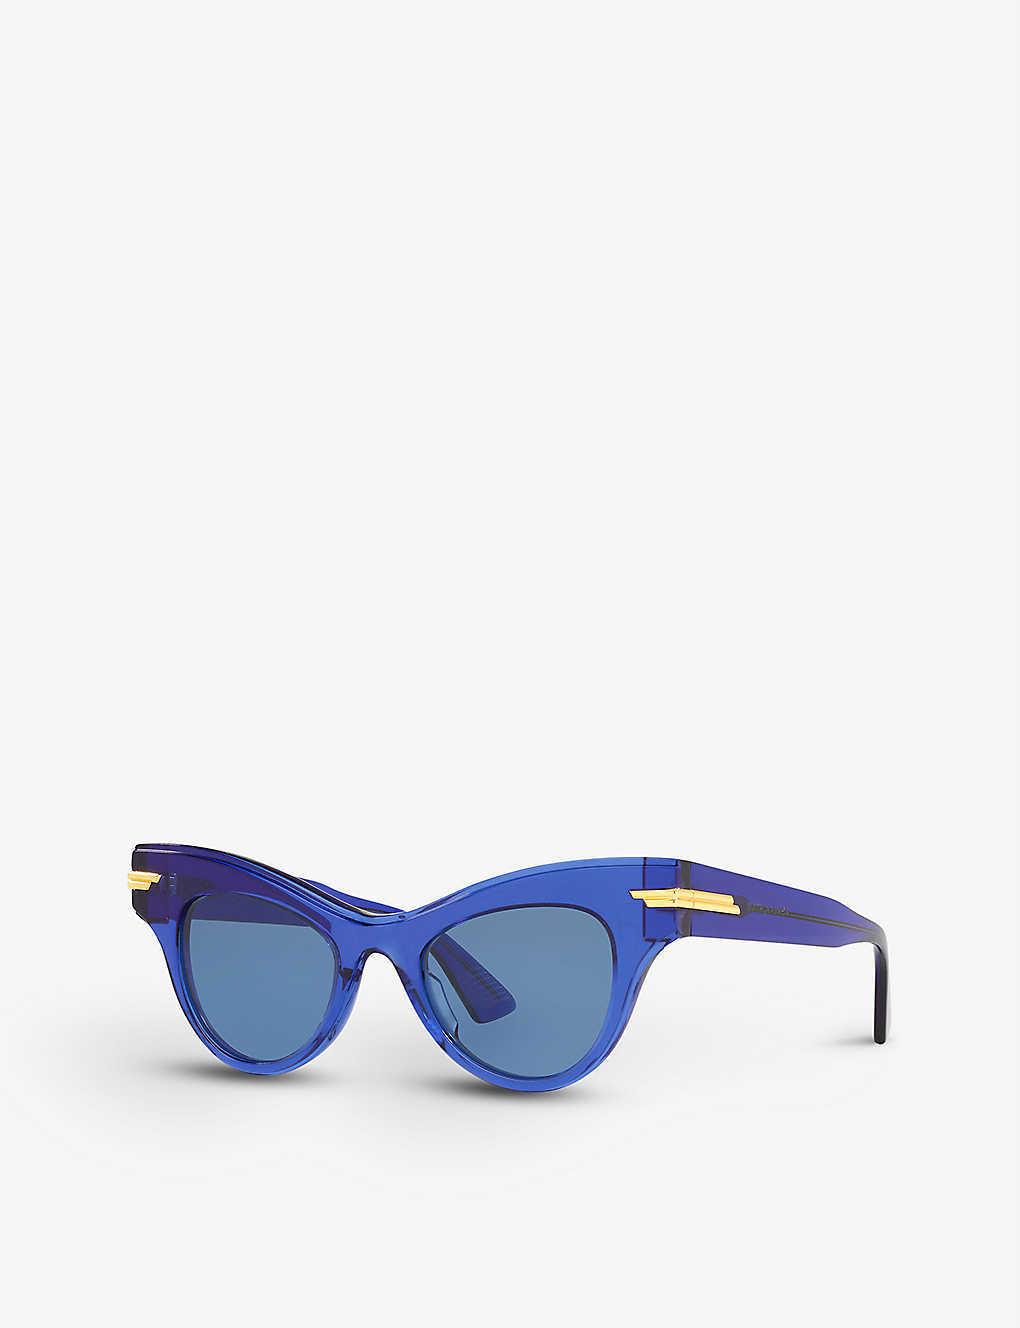 Royal blue acetate Bottega Veneta cat's eye shaped sunglasses with gold hinges